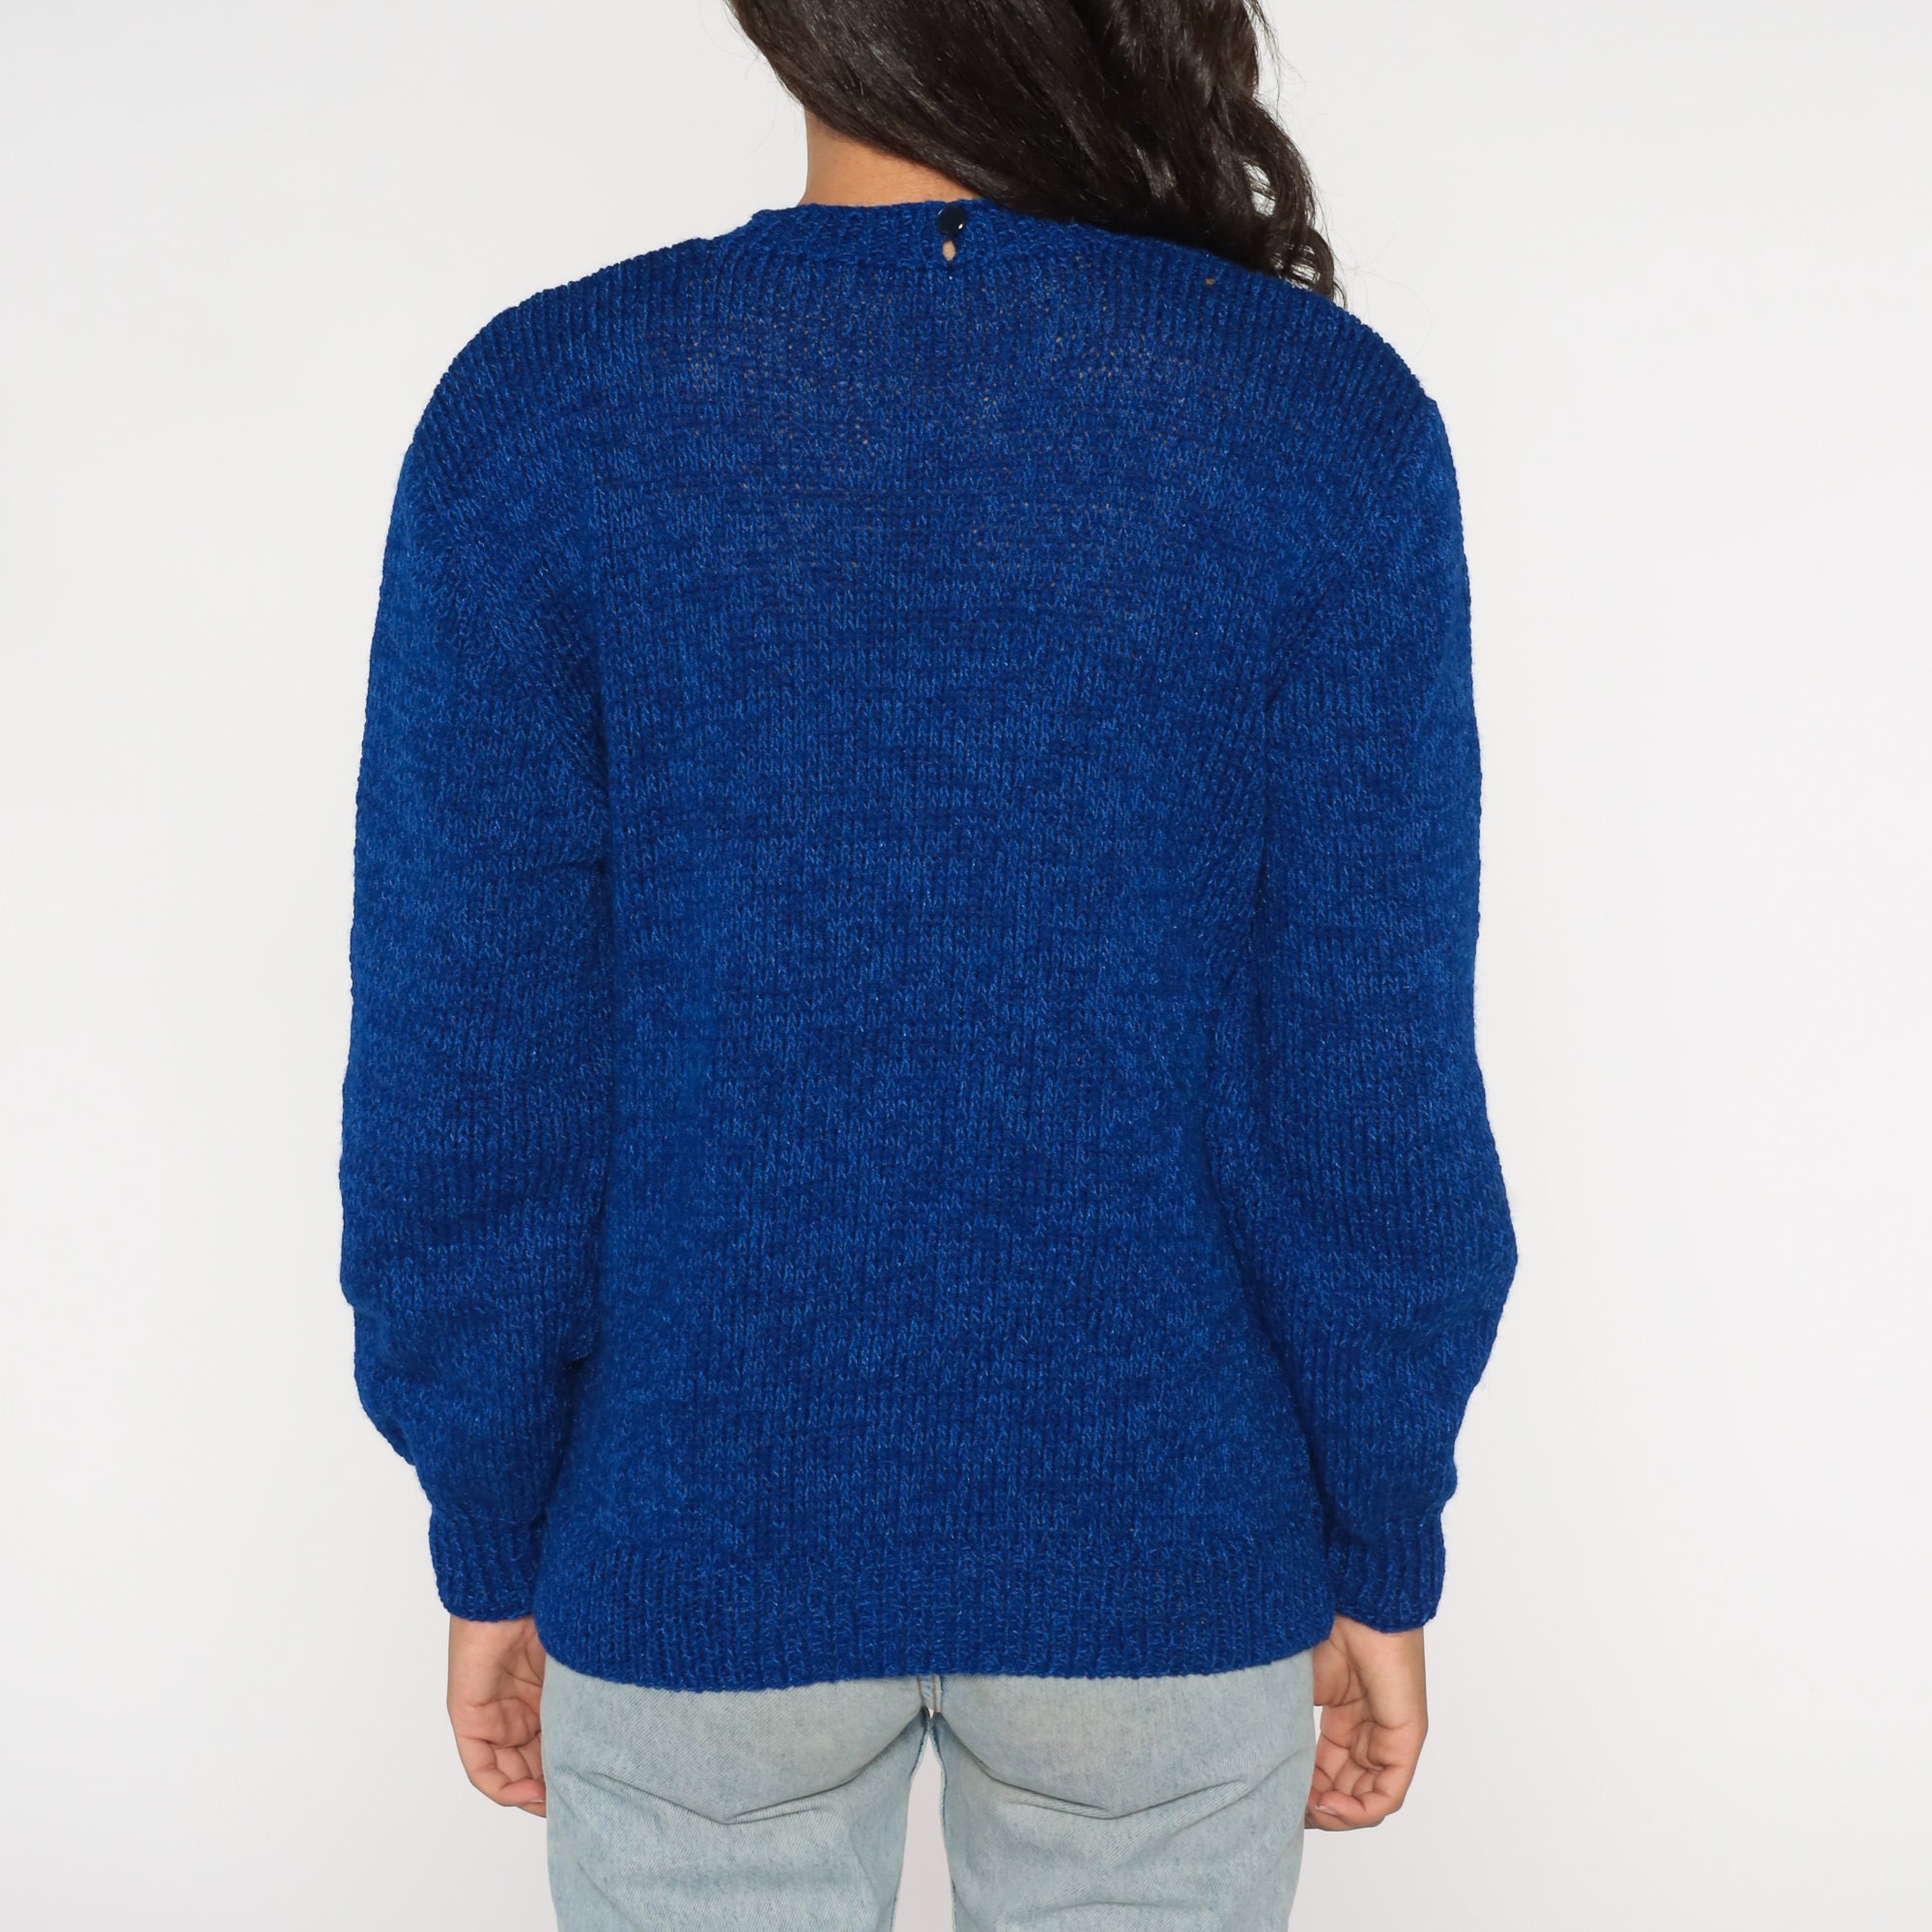 Blue Knit Sweater 80s Crewneck Pullover Flecked Sweater Retro Basic ...